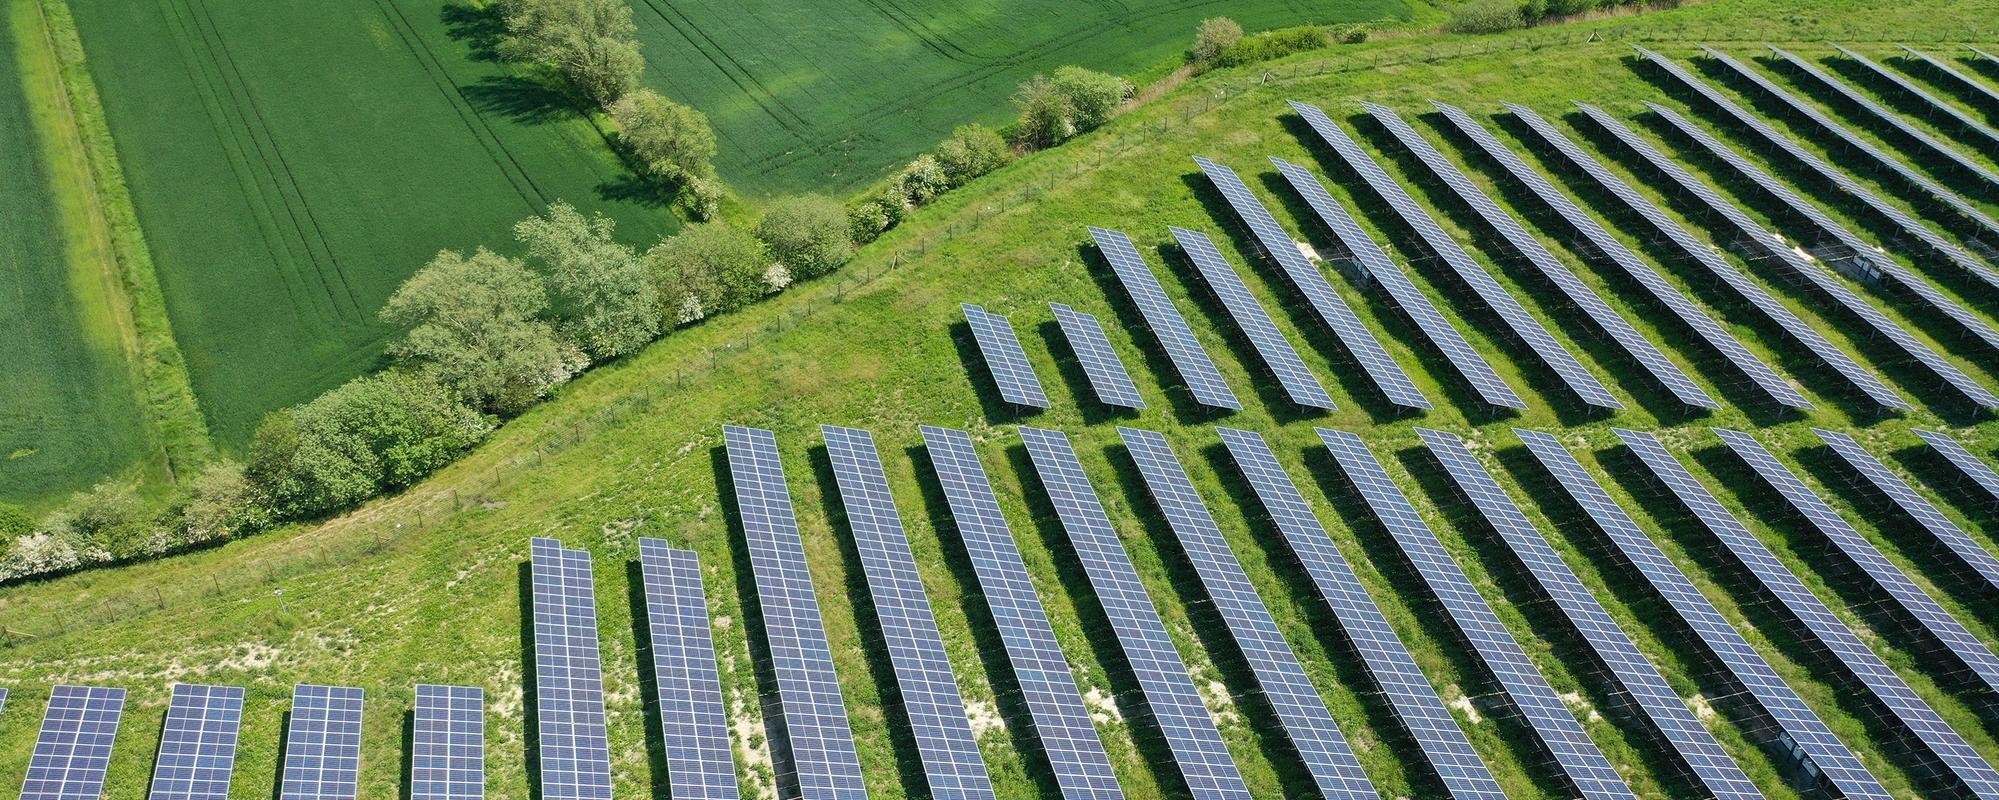 Aerial shot of field of solar panels